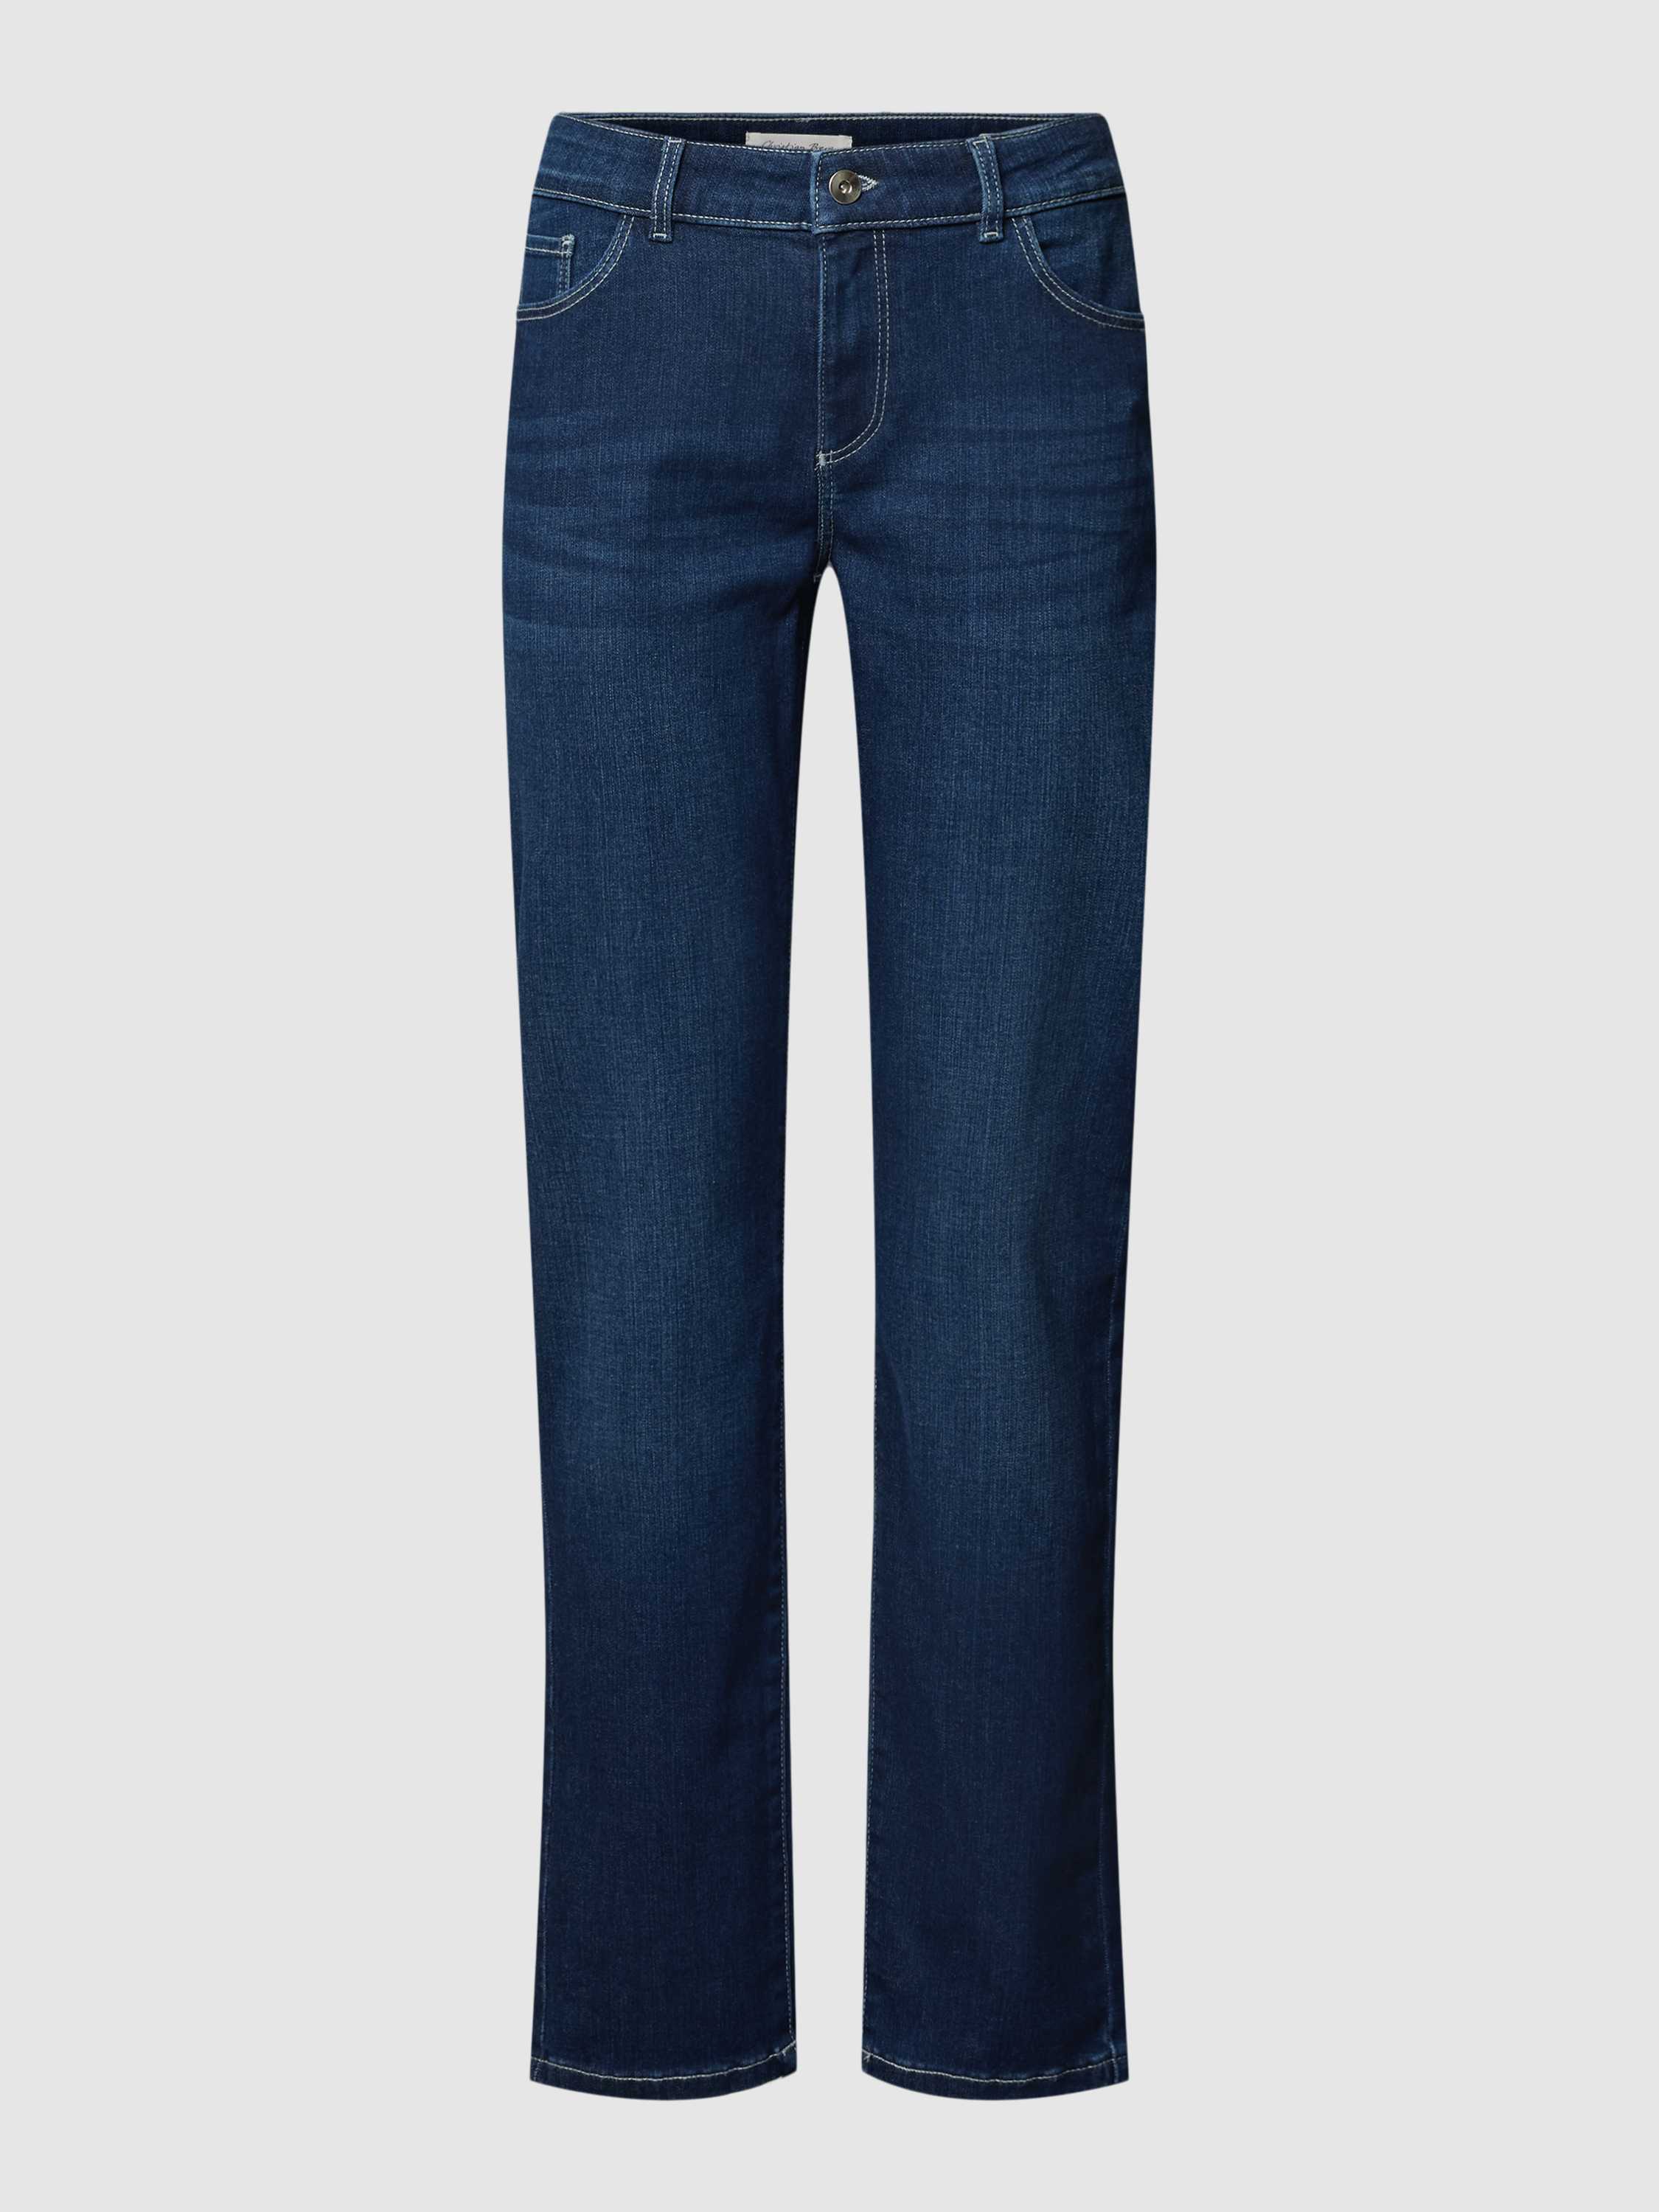 Christian Berg Woman Jeans in 5-pocketmodel